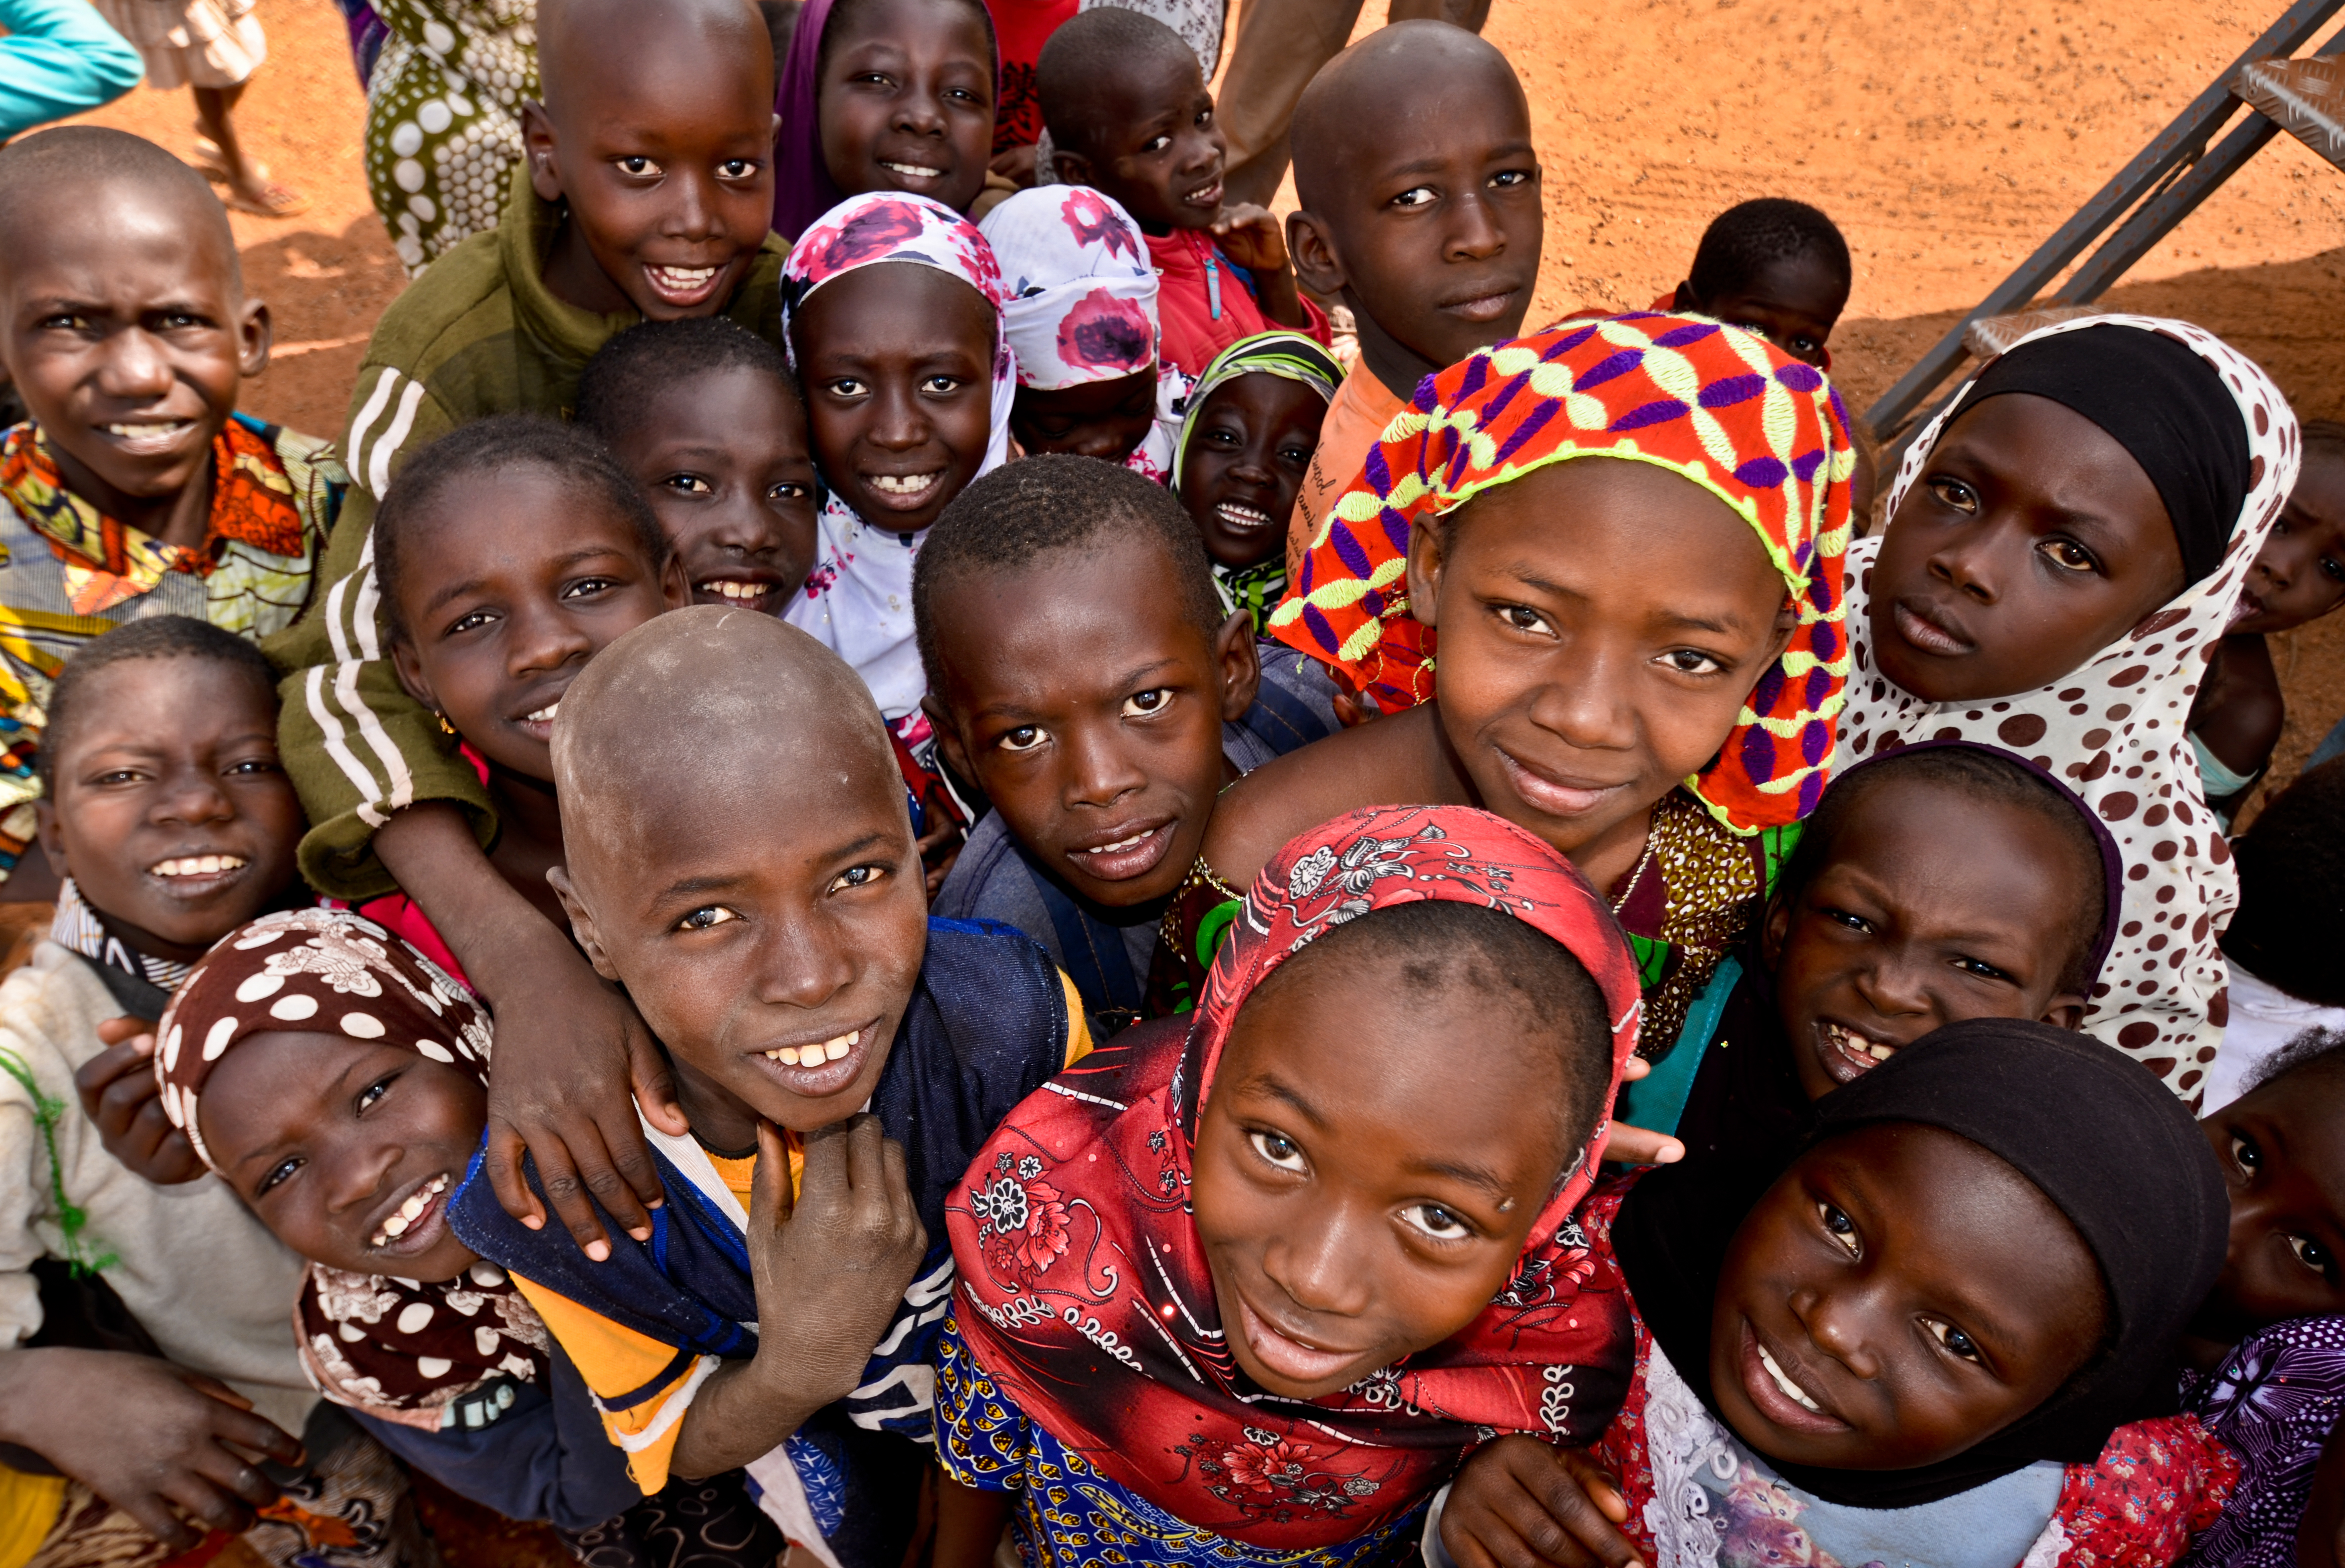 Starving help. Африка костюмы для детей. Западная Африка люди. Африка е.